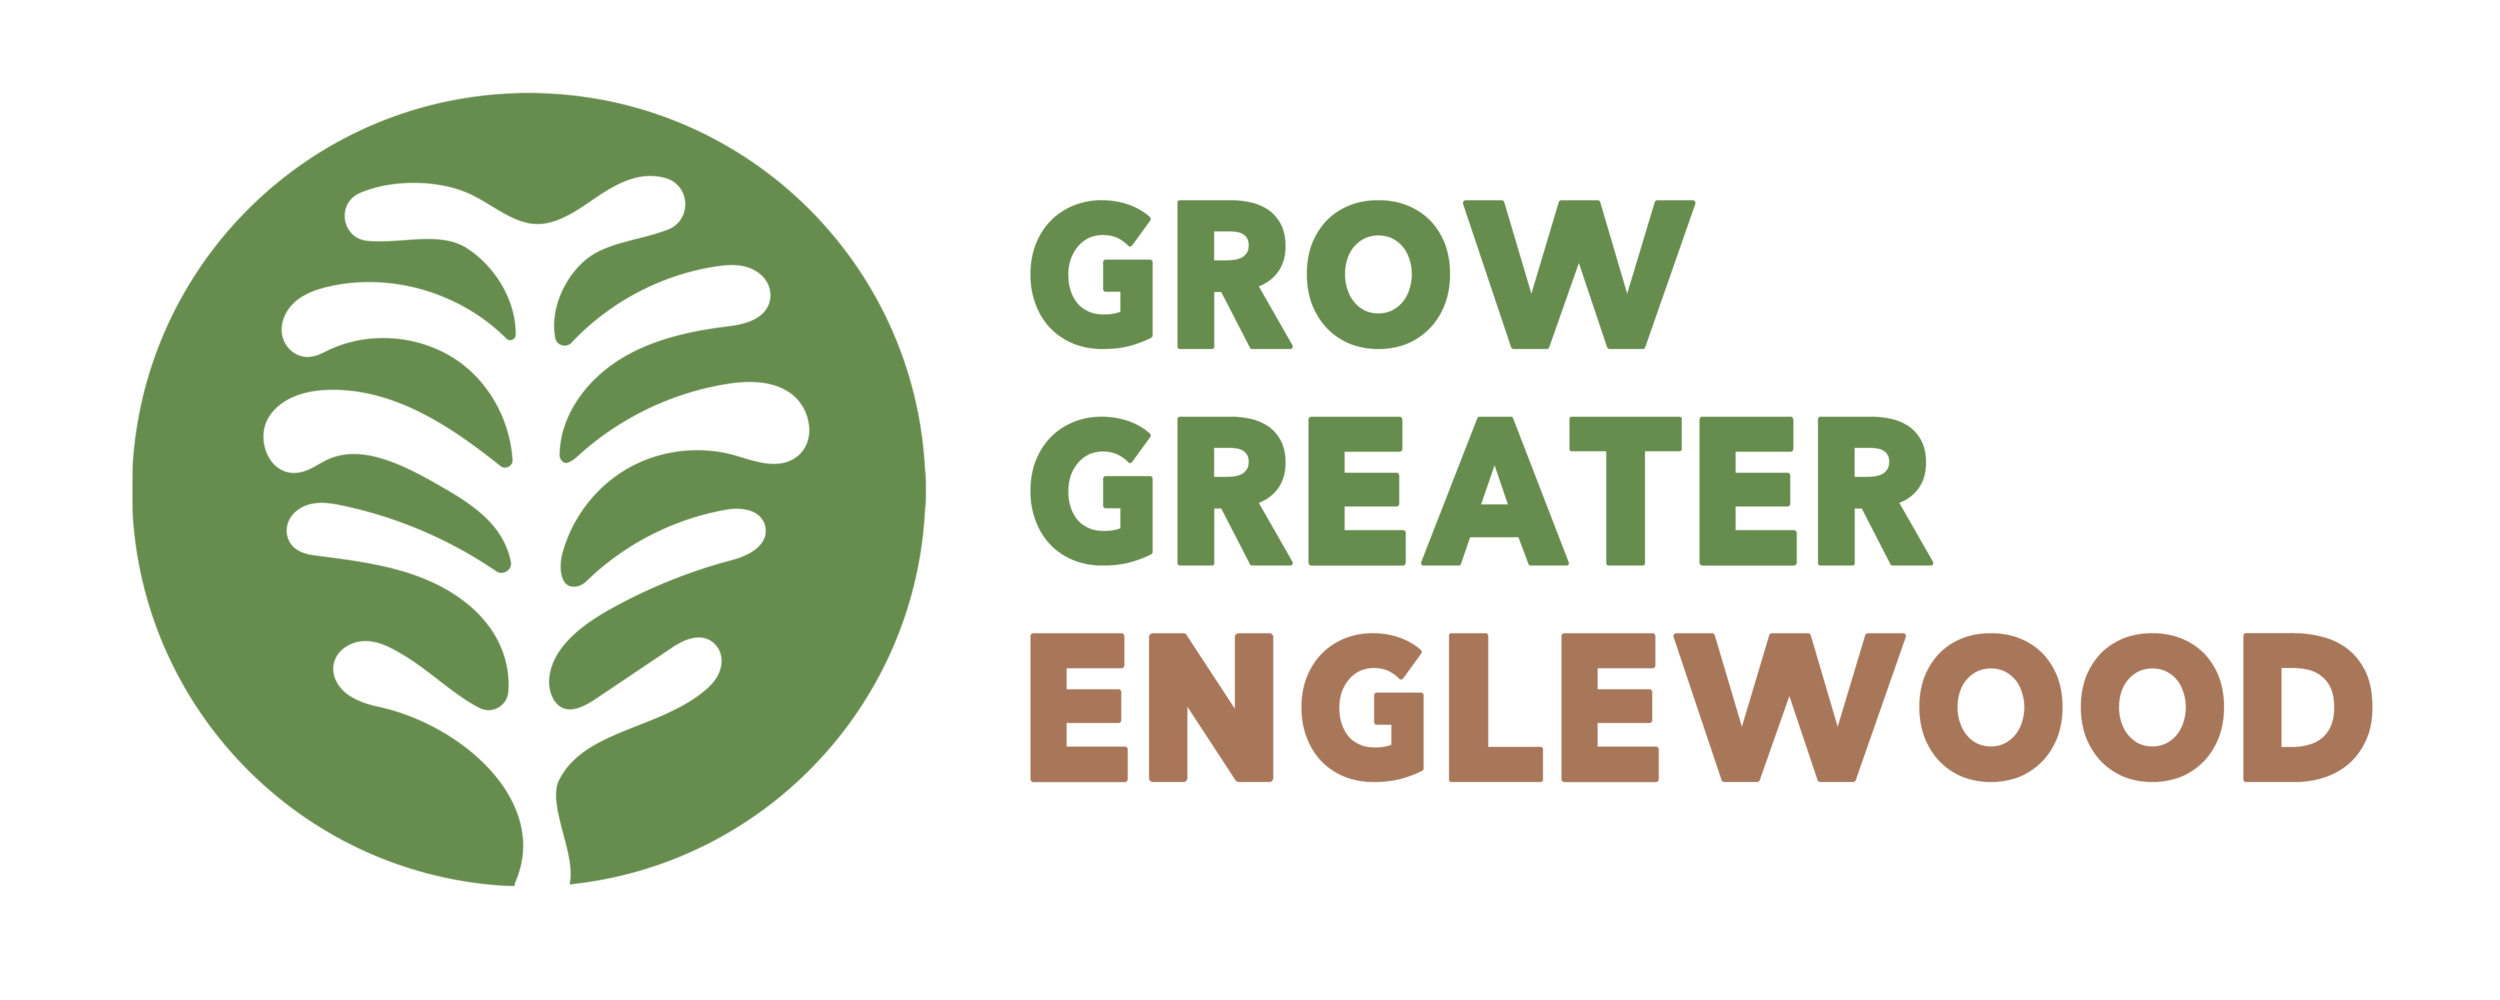 Grow Greater Englewood 